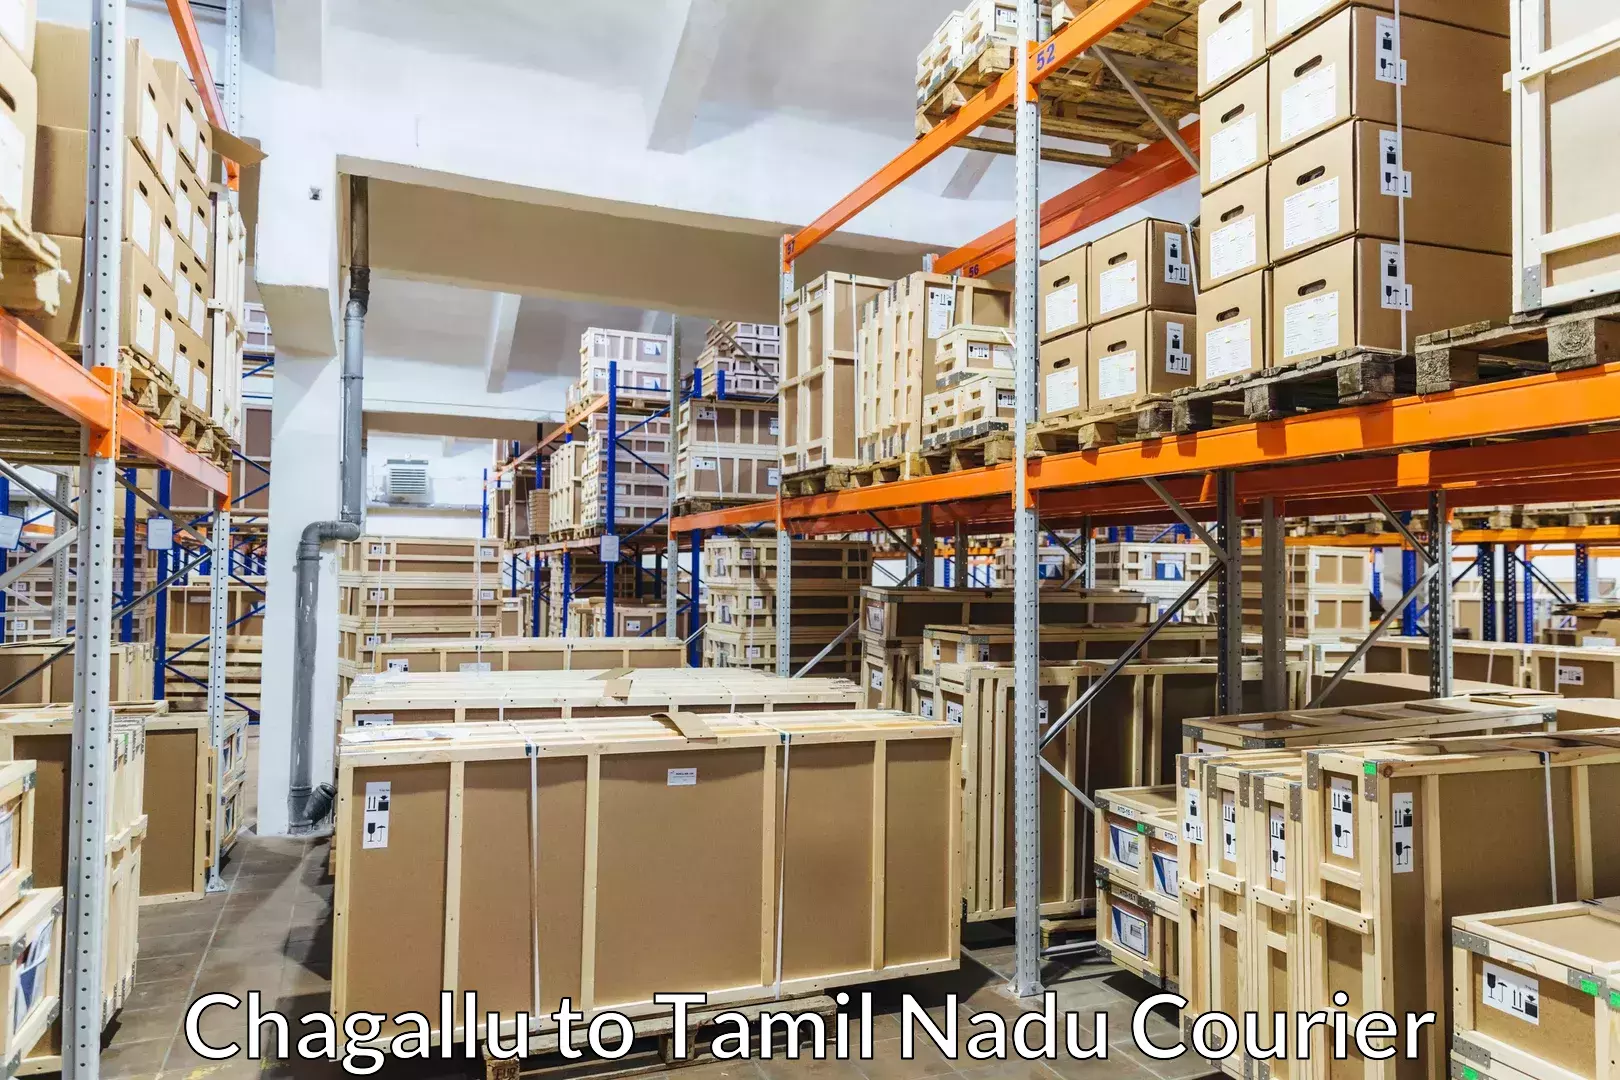 Professional moving company Chagallu to Tamil Nadu